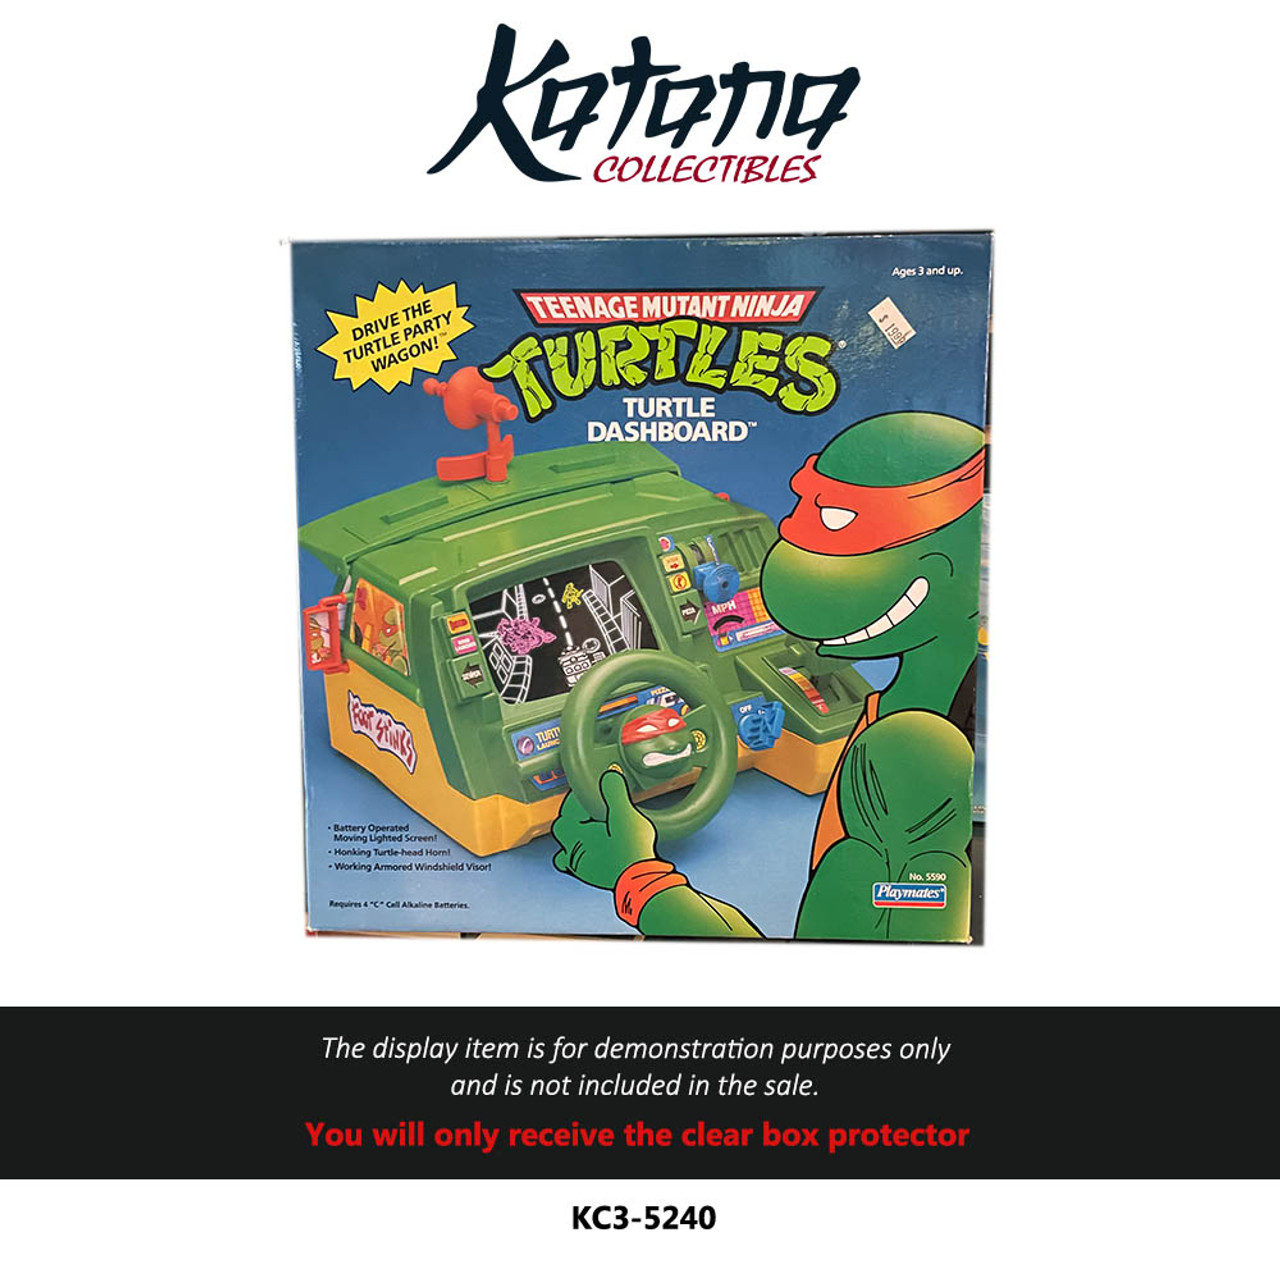 Katana Collectibles Protector For TMNT Turtle Dashboard